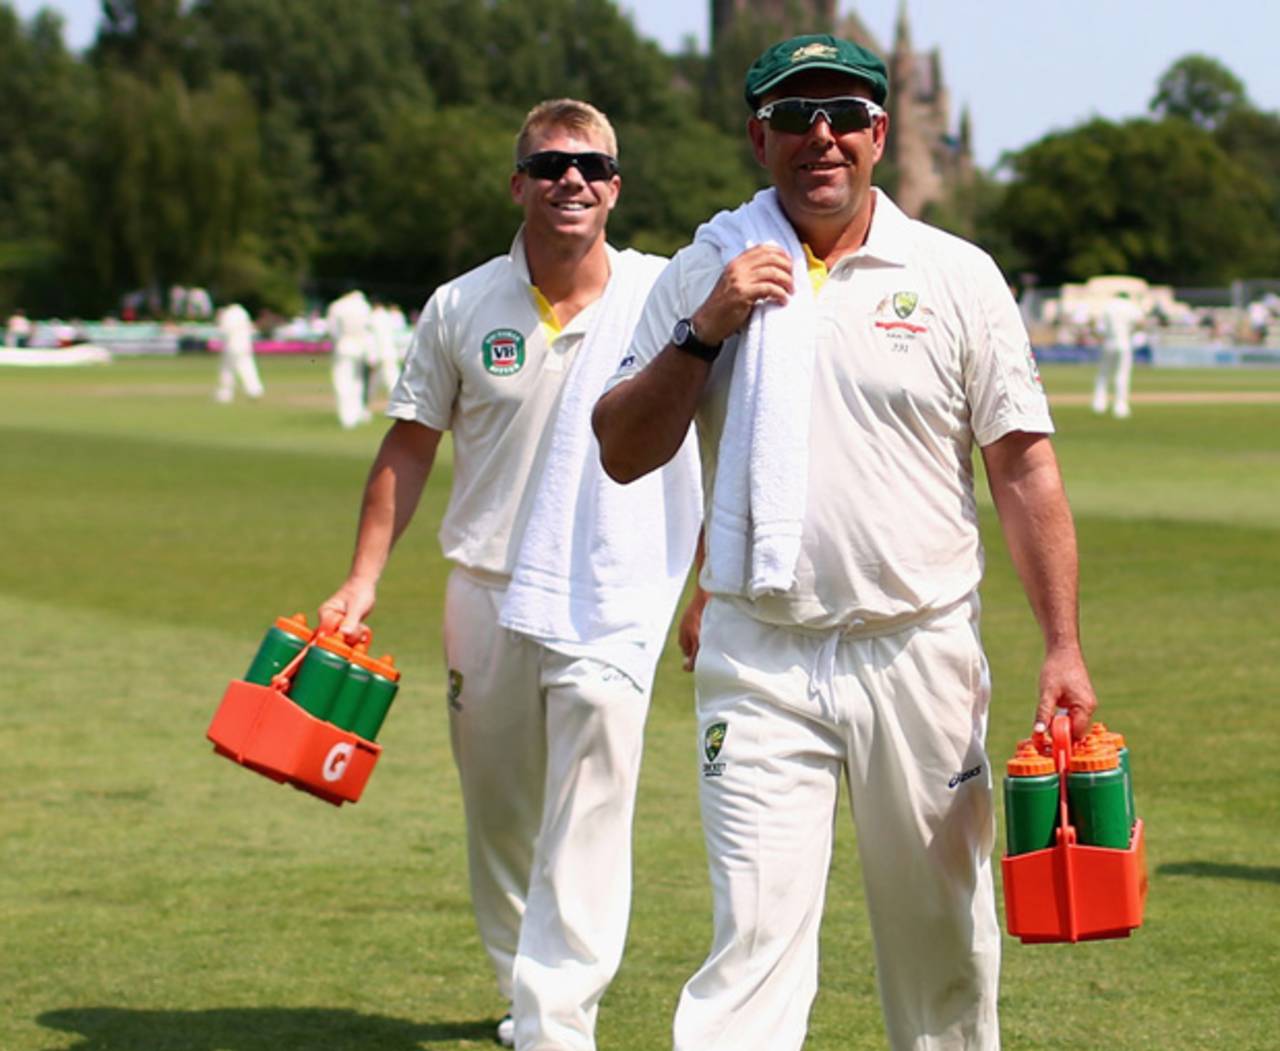 Darren Lehmann and David Warner walk off after carrying drinks, Worcestershire v Australians, 4th day, July 5, 2013